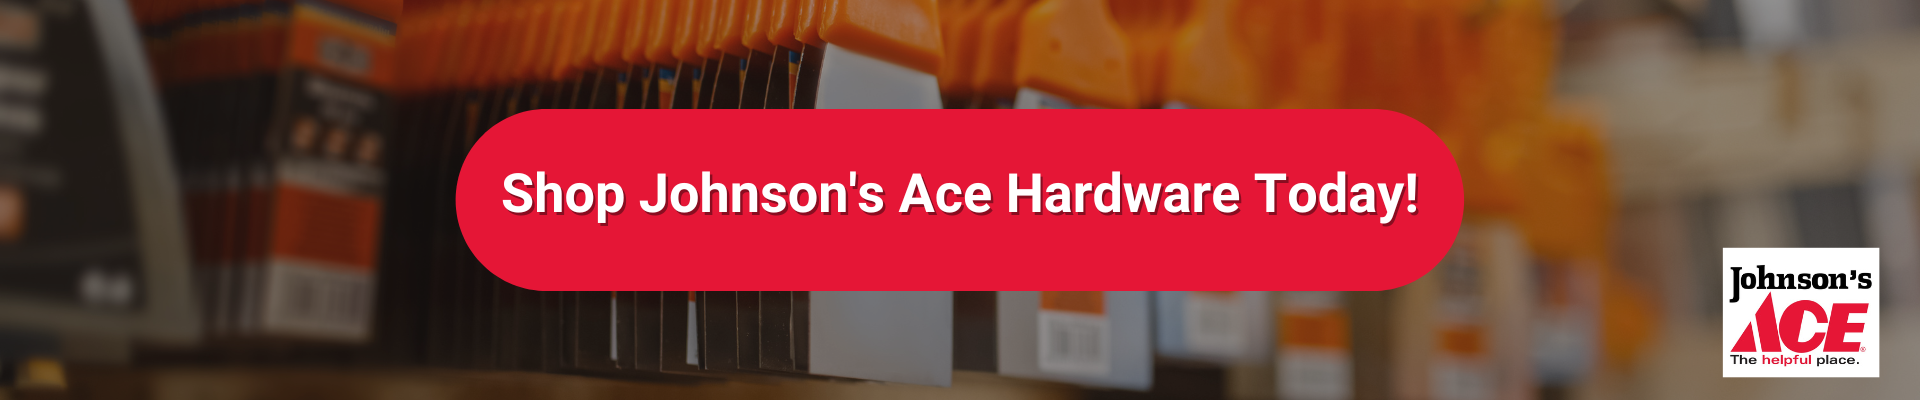 Shop Johnson's Ace Hardware Today!